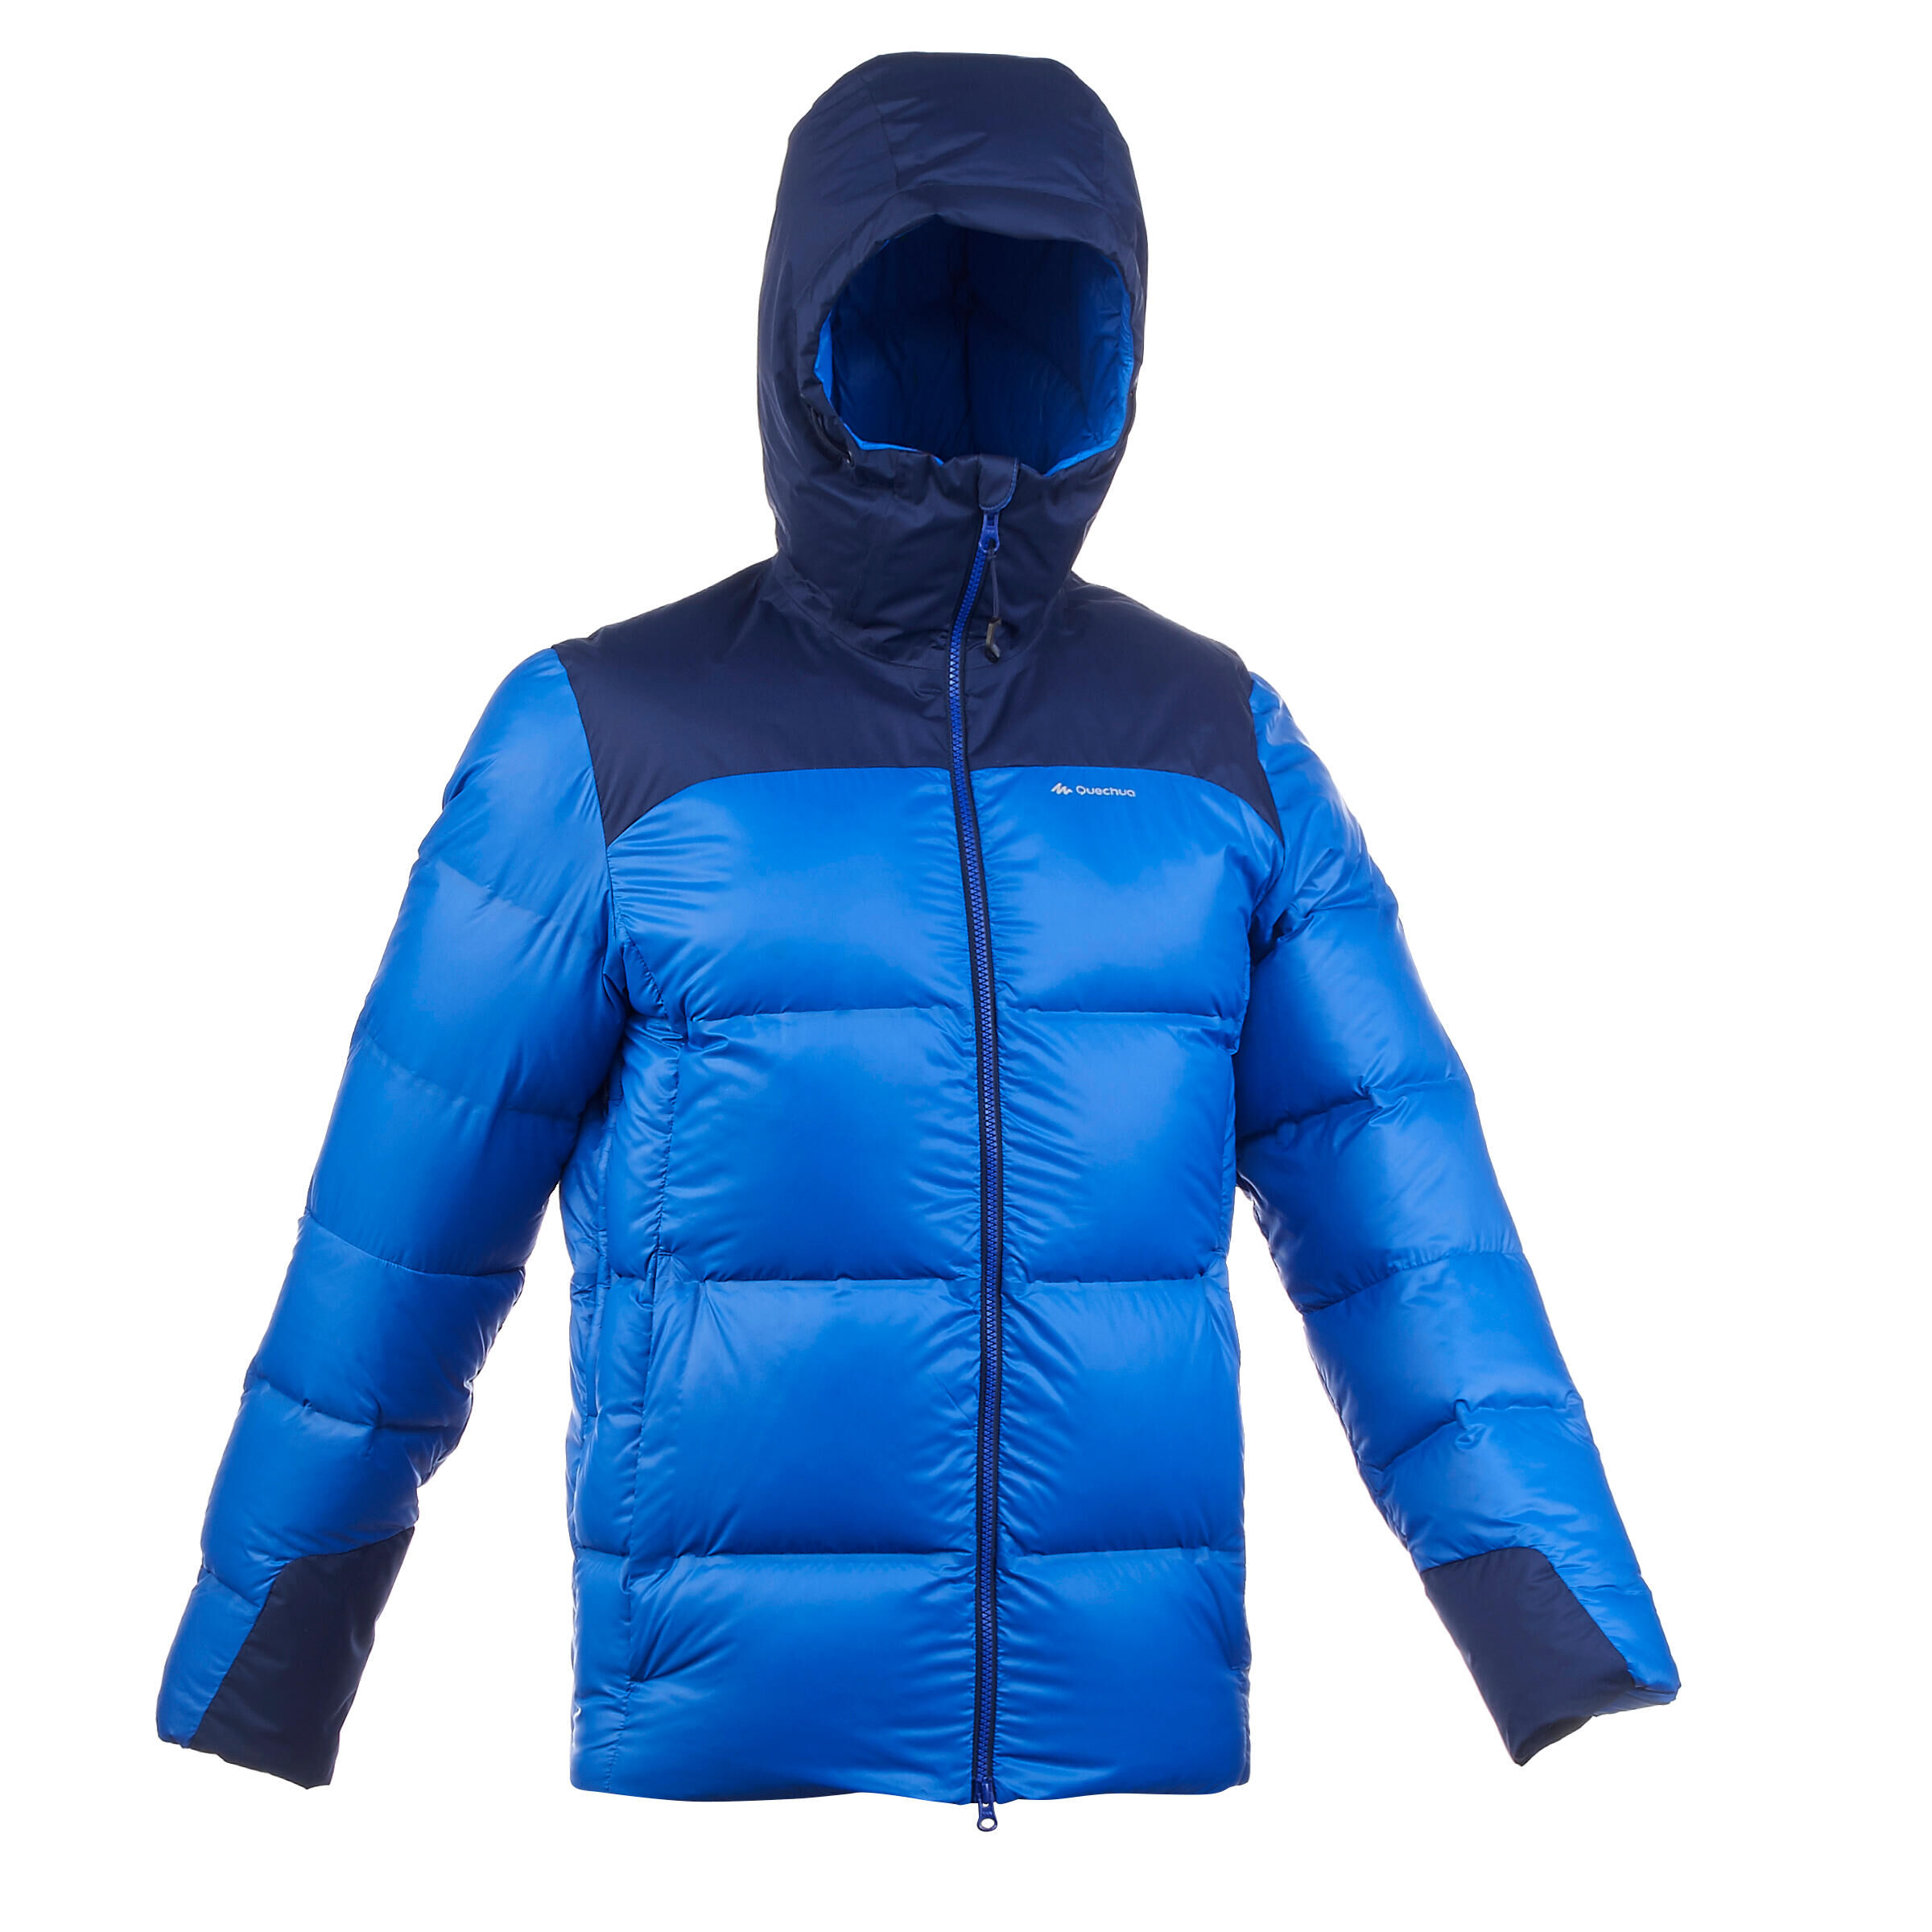 FORCLAZ Men's Mountain Trekking Down Jacket - TREK 900 -18°C Blue